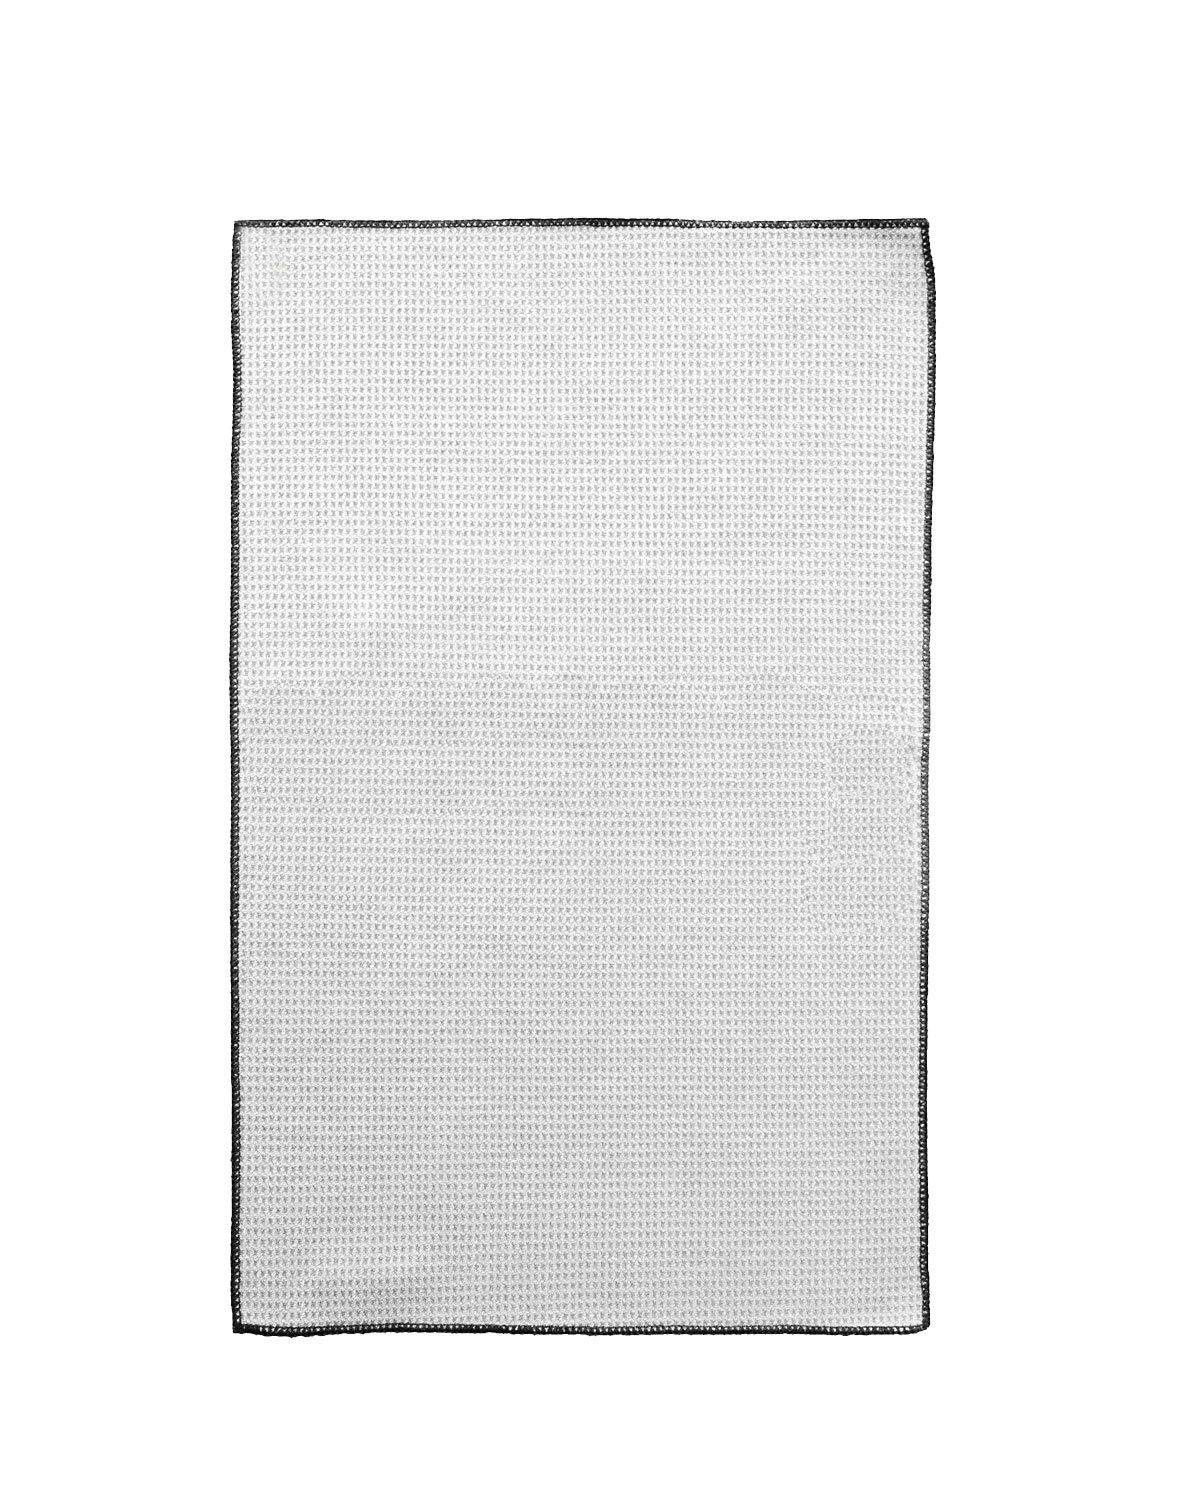 Image for Microfiber Waffle Towel